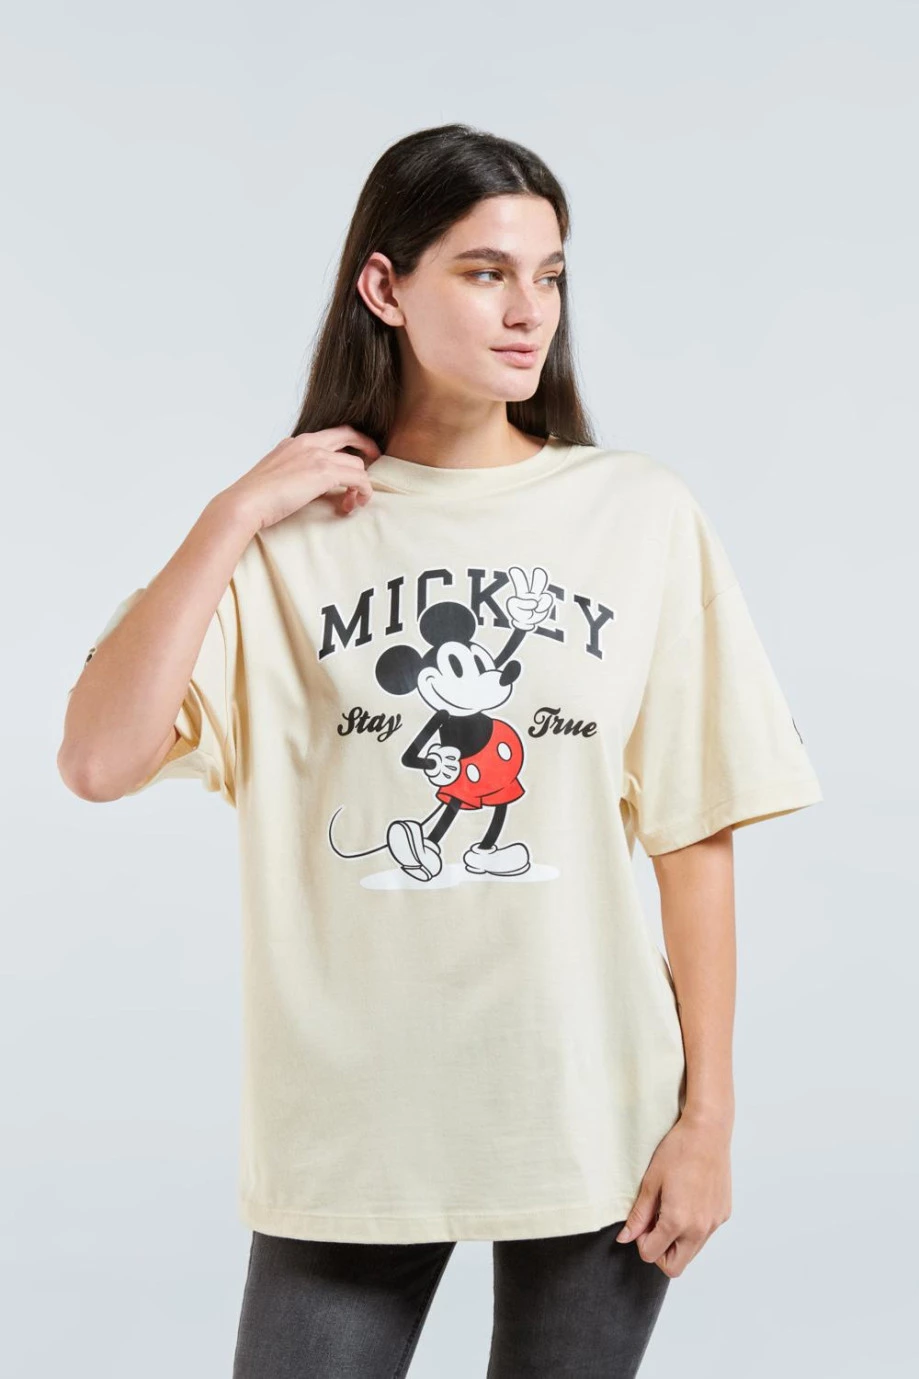 Camiseta femenina hombro rodado manga corta con estampado en frente de Mickey, Disney